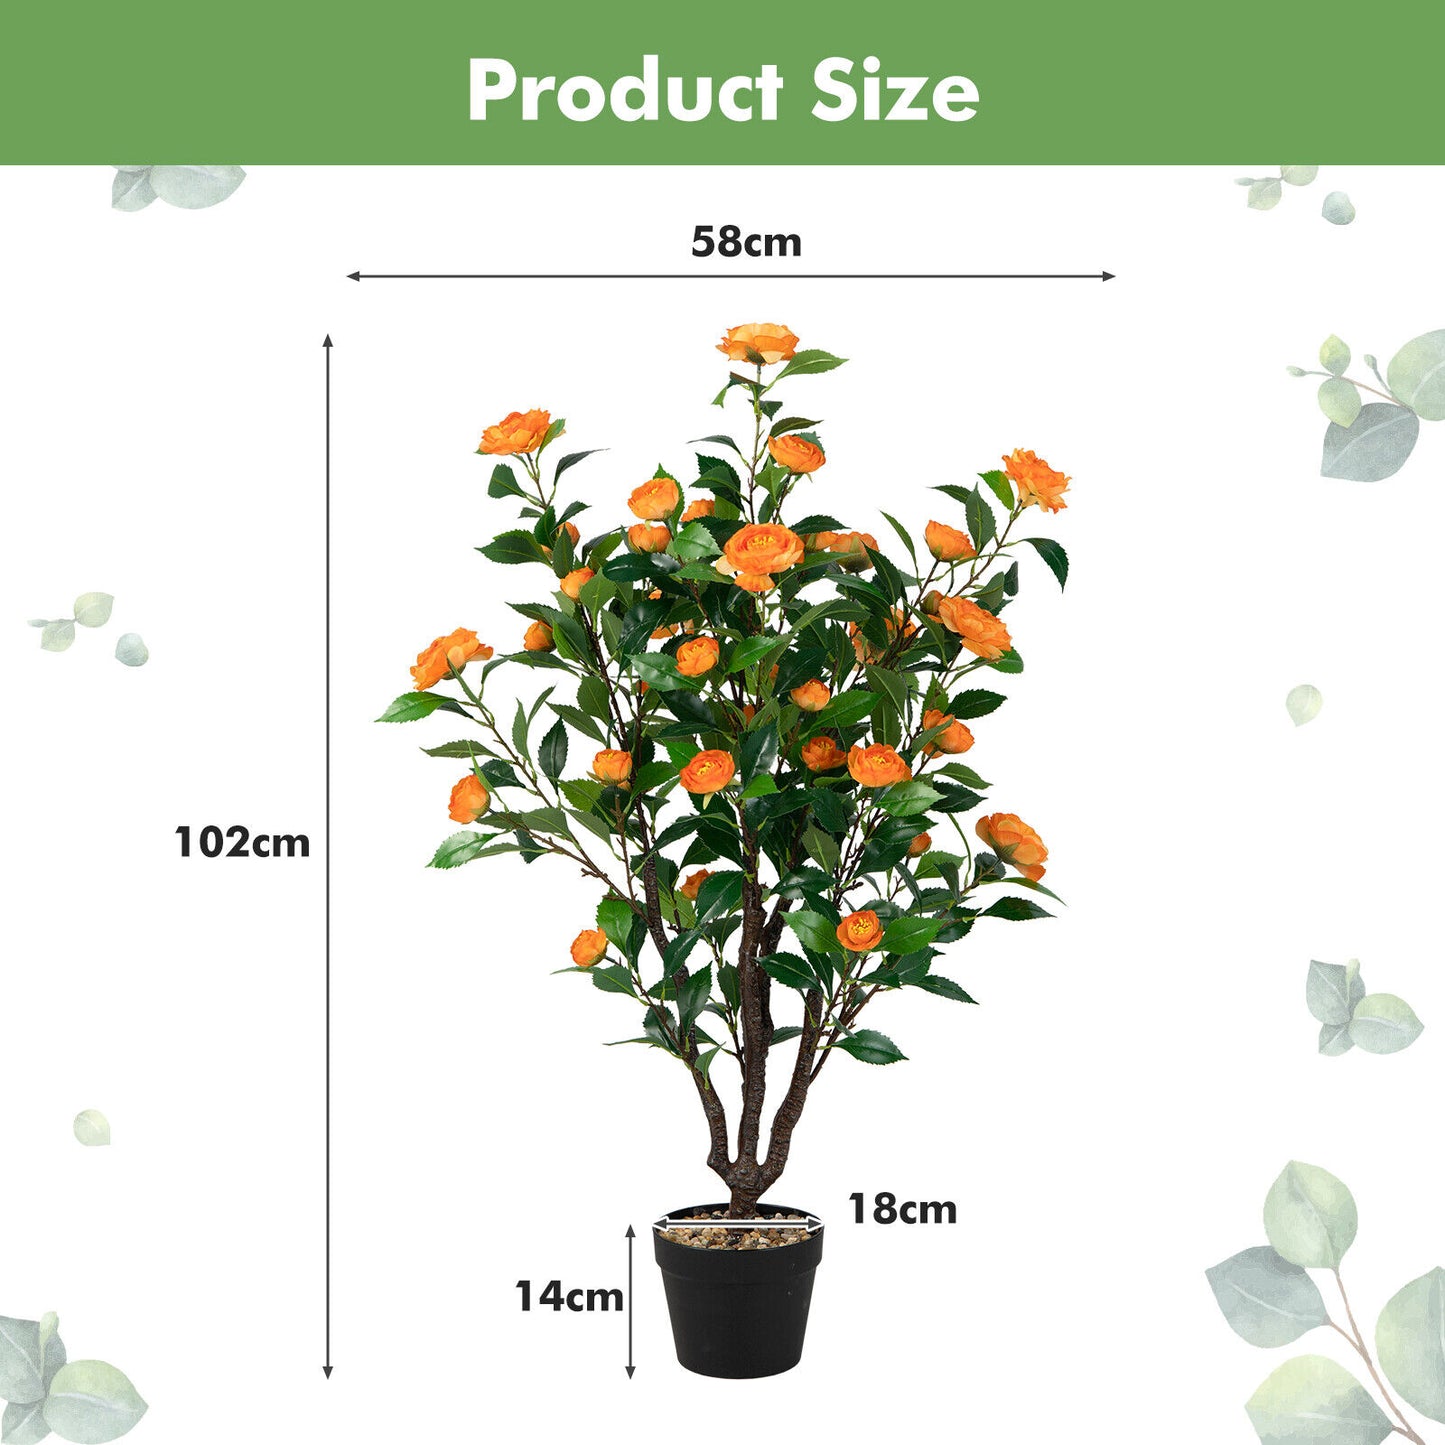 102 CM Artificial Camellia Tree Indoor Garden Decor Faux Plant Outdoor